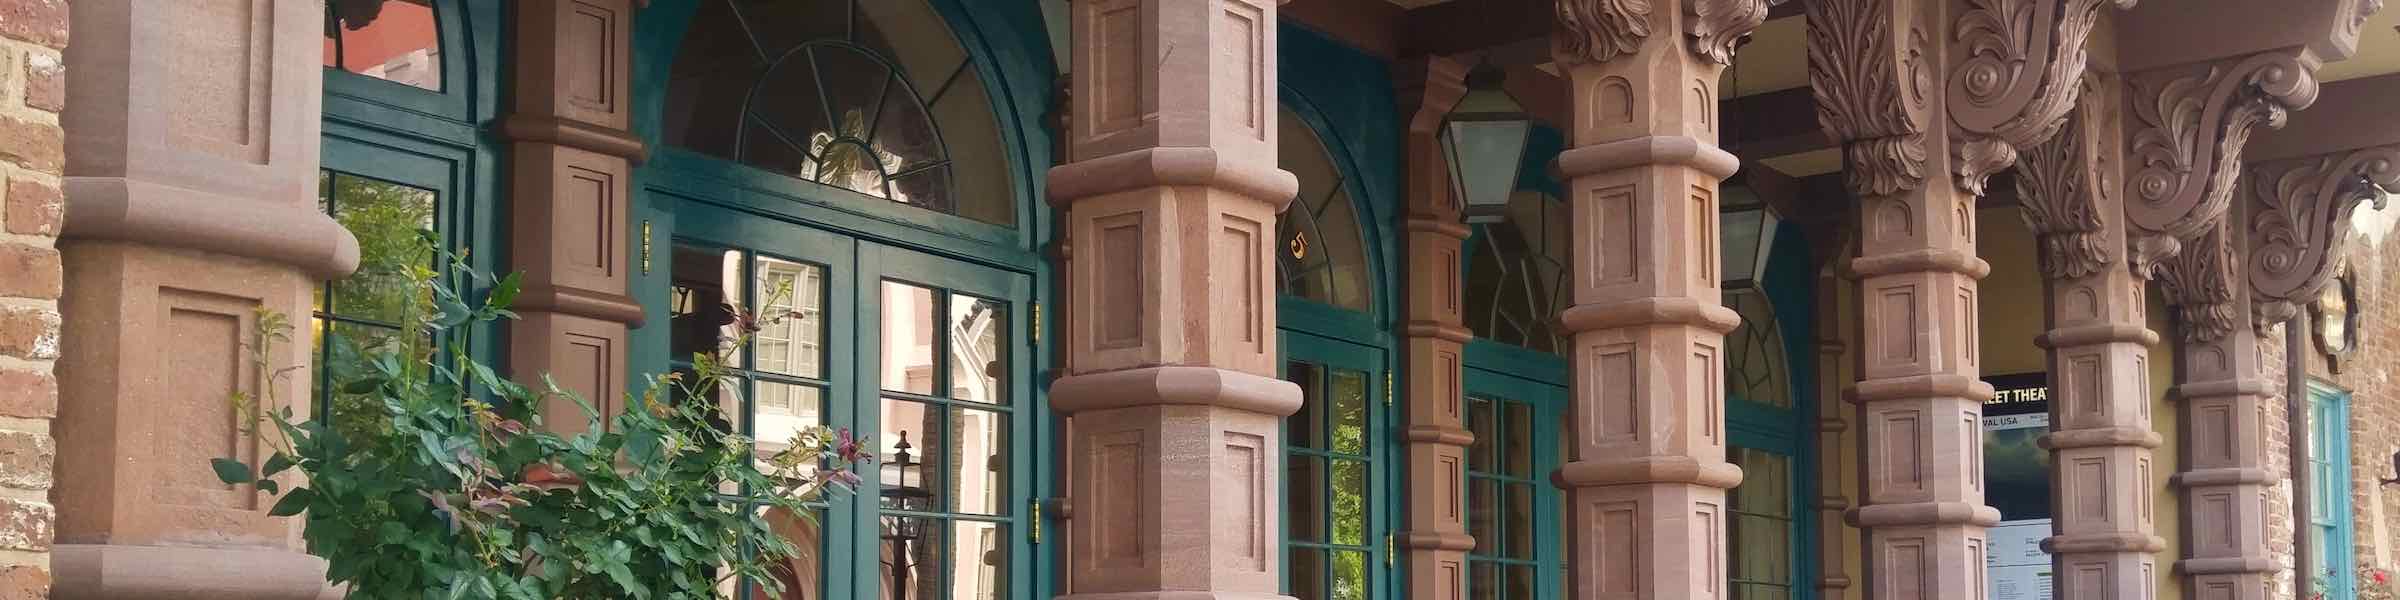 Pillars on the facade of the Dock Street Theatre, Charleston, SC.